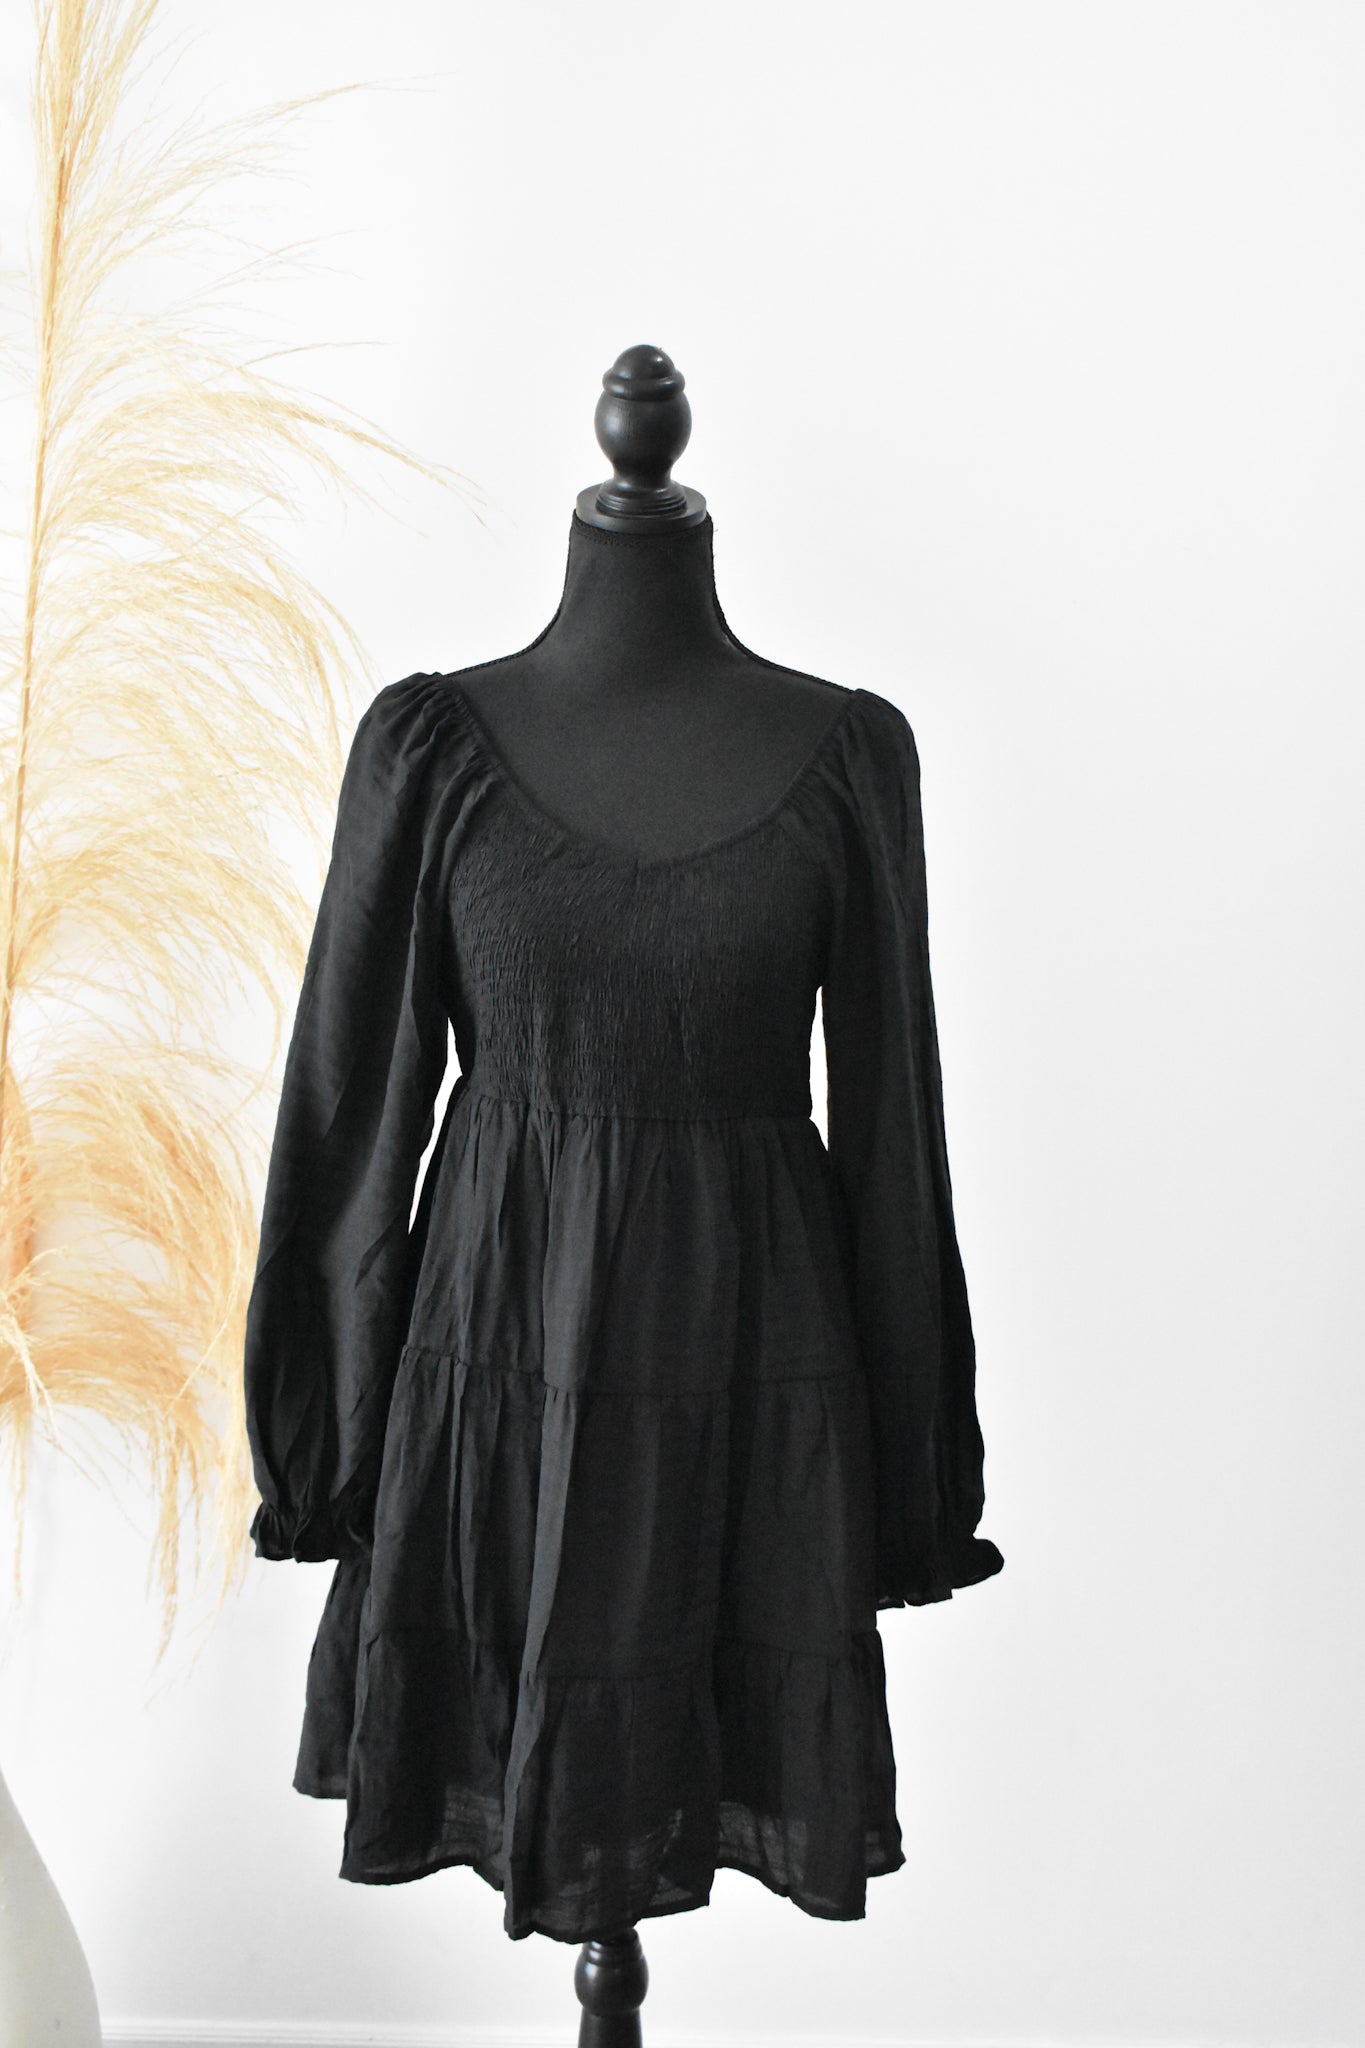 The Joy Black Dress